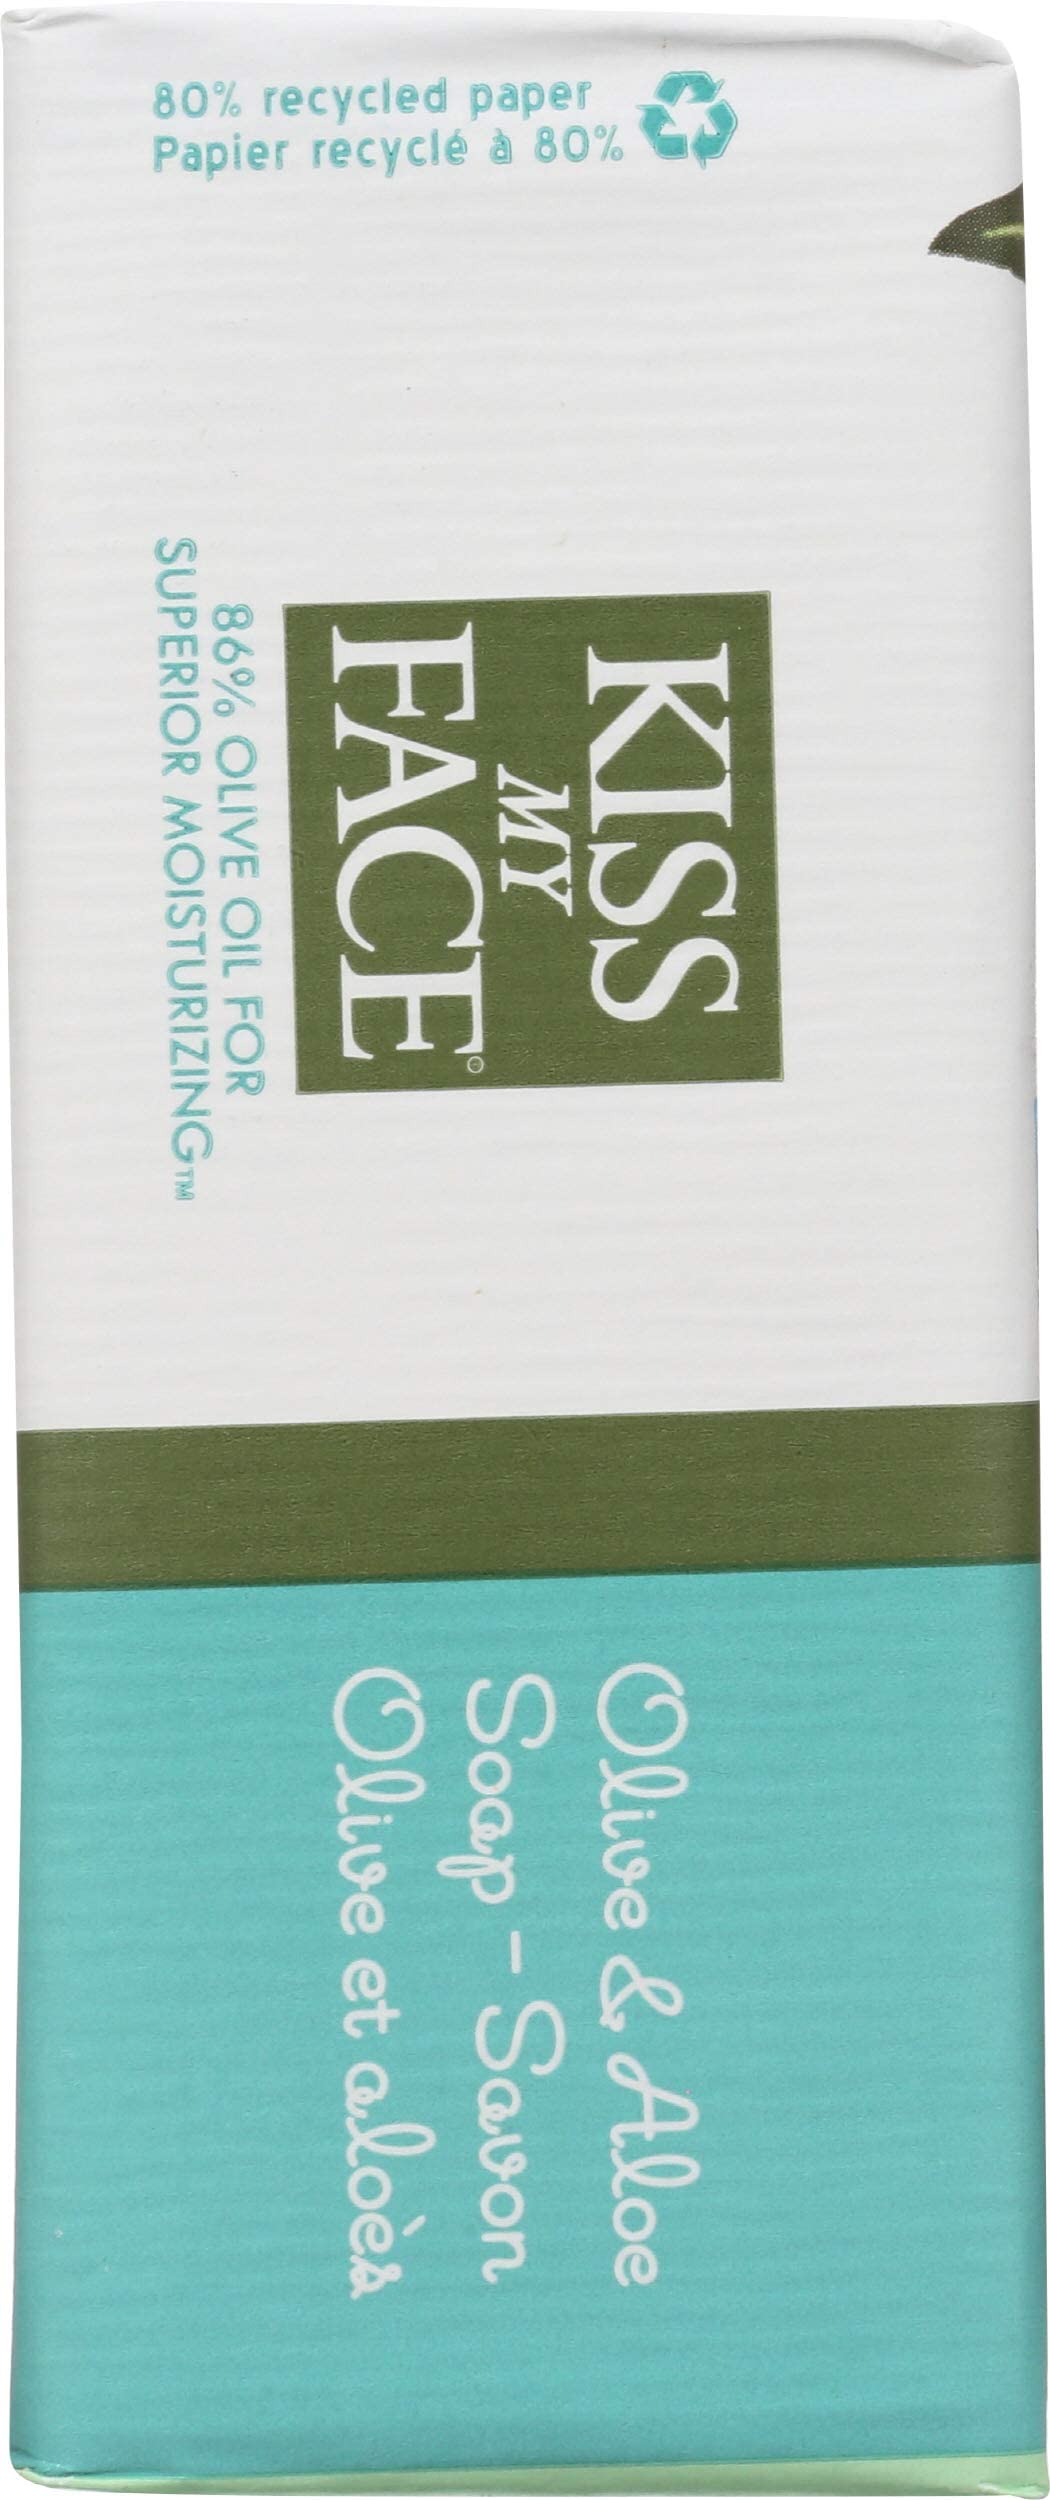 Kiss My Face Moisturizing Bar Soap for All Skin Types - Olive & Aloe - 8 oz